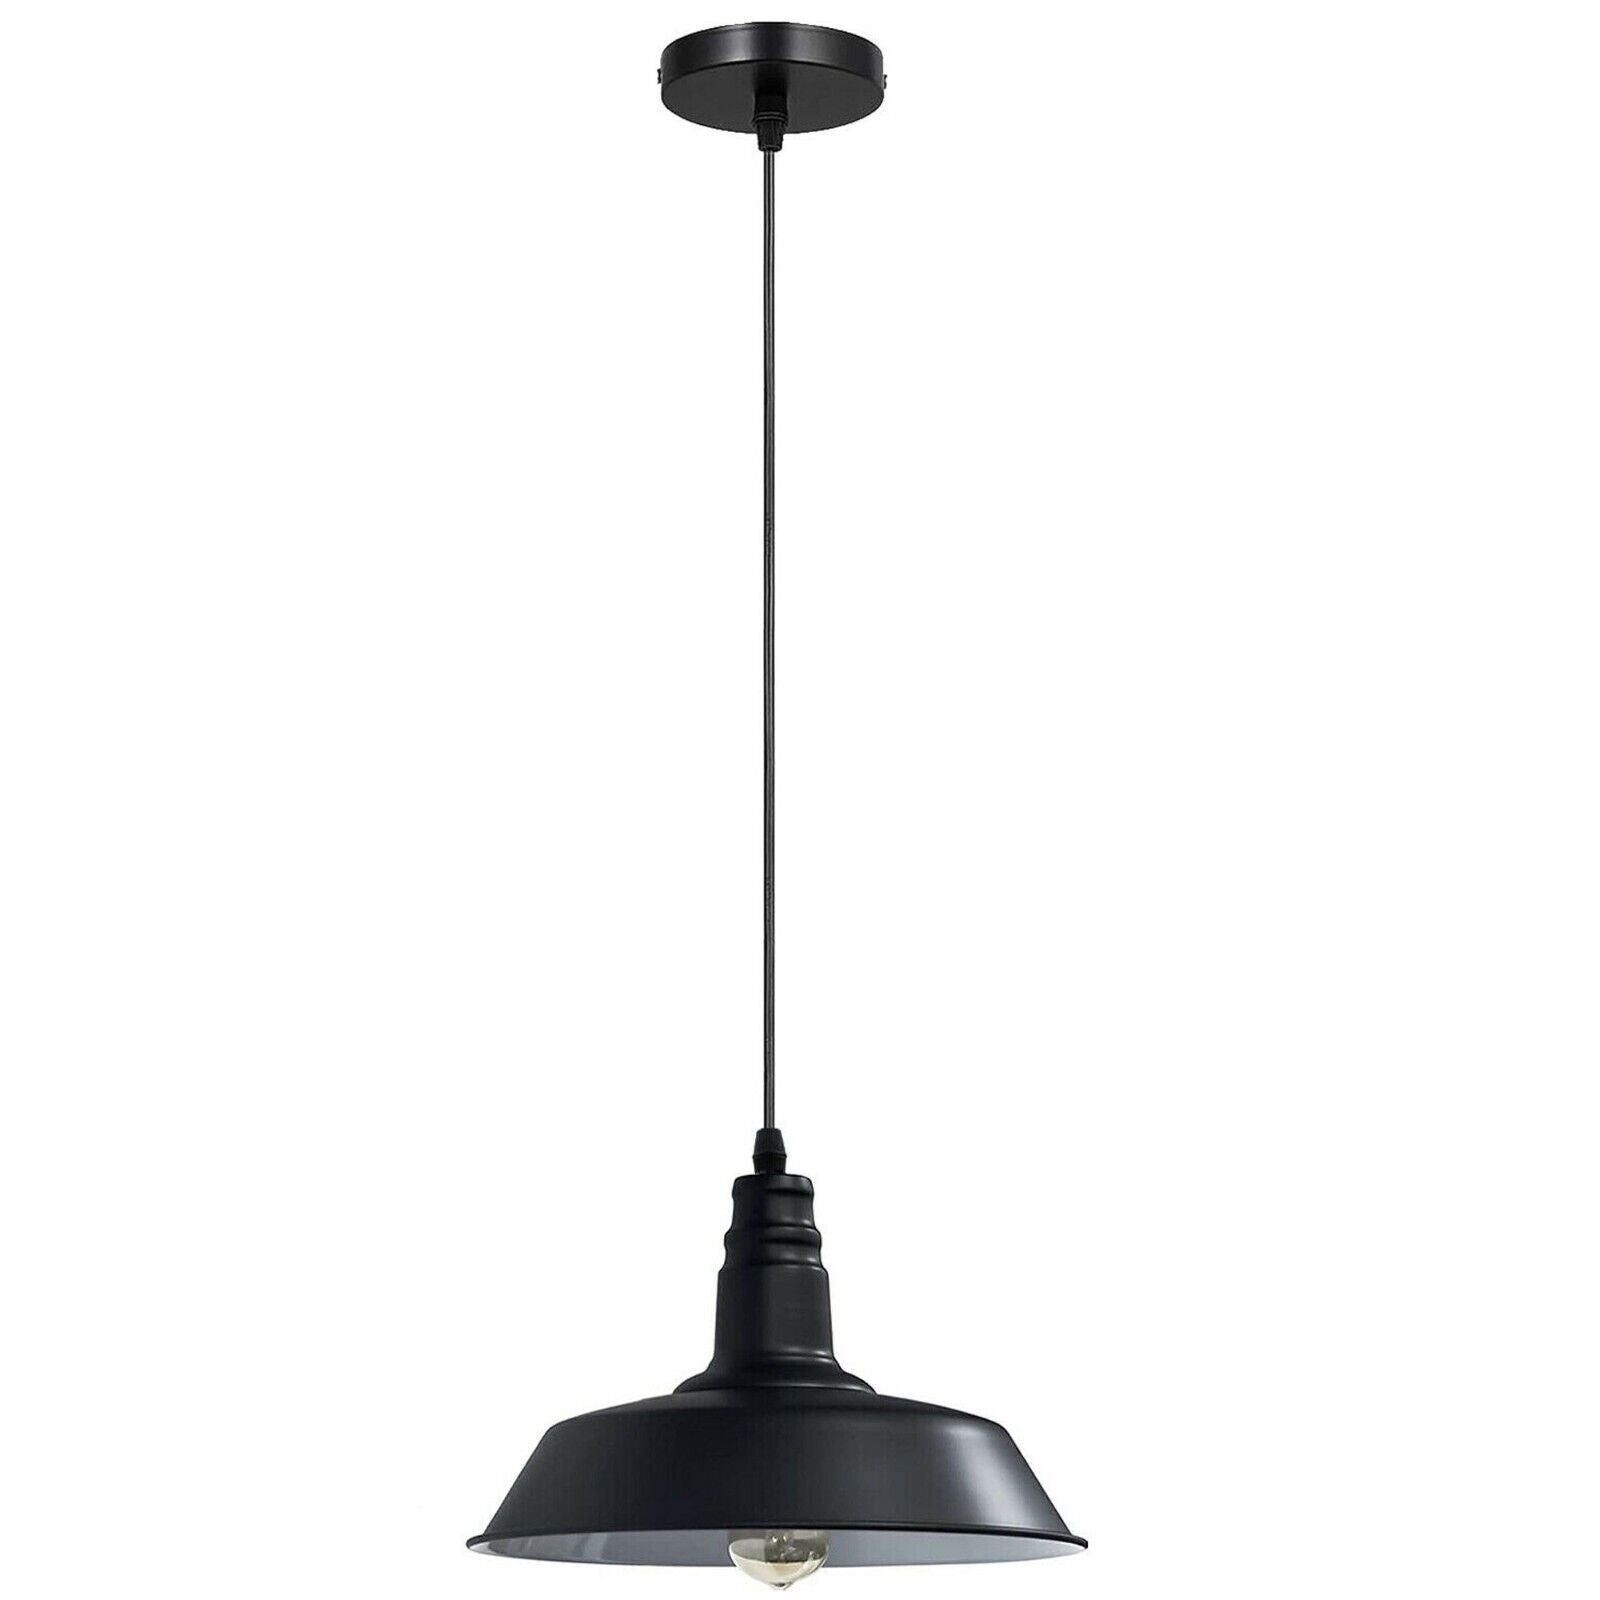  Hanging pendant Ceiling Lamp, Metal Light Shade Lighting UK E27 Edison base Decorate Height Adjustable Pendant Light for Bar, Restaurant , Home and Kitchen